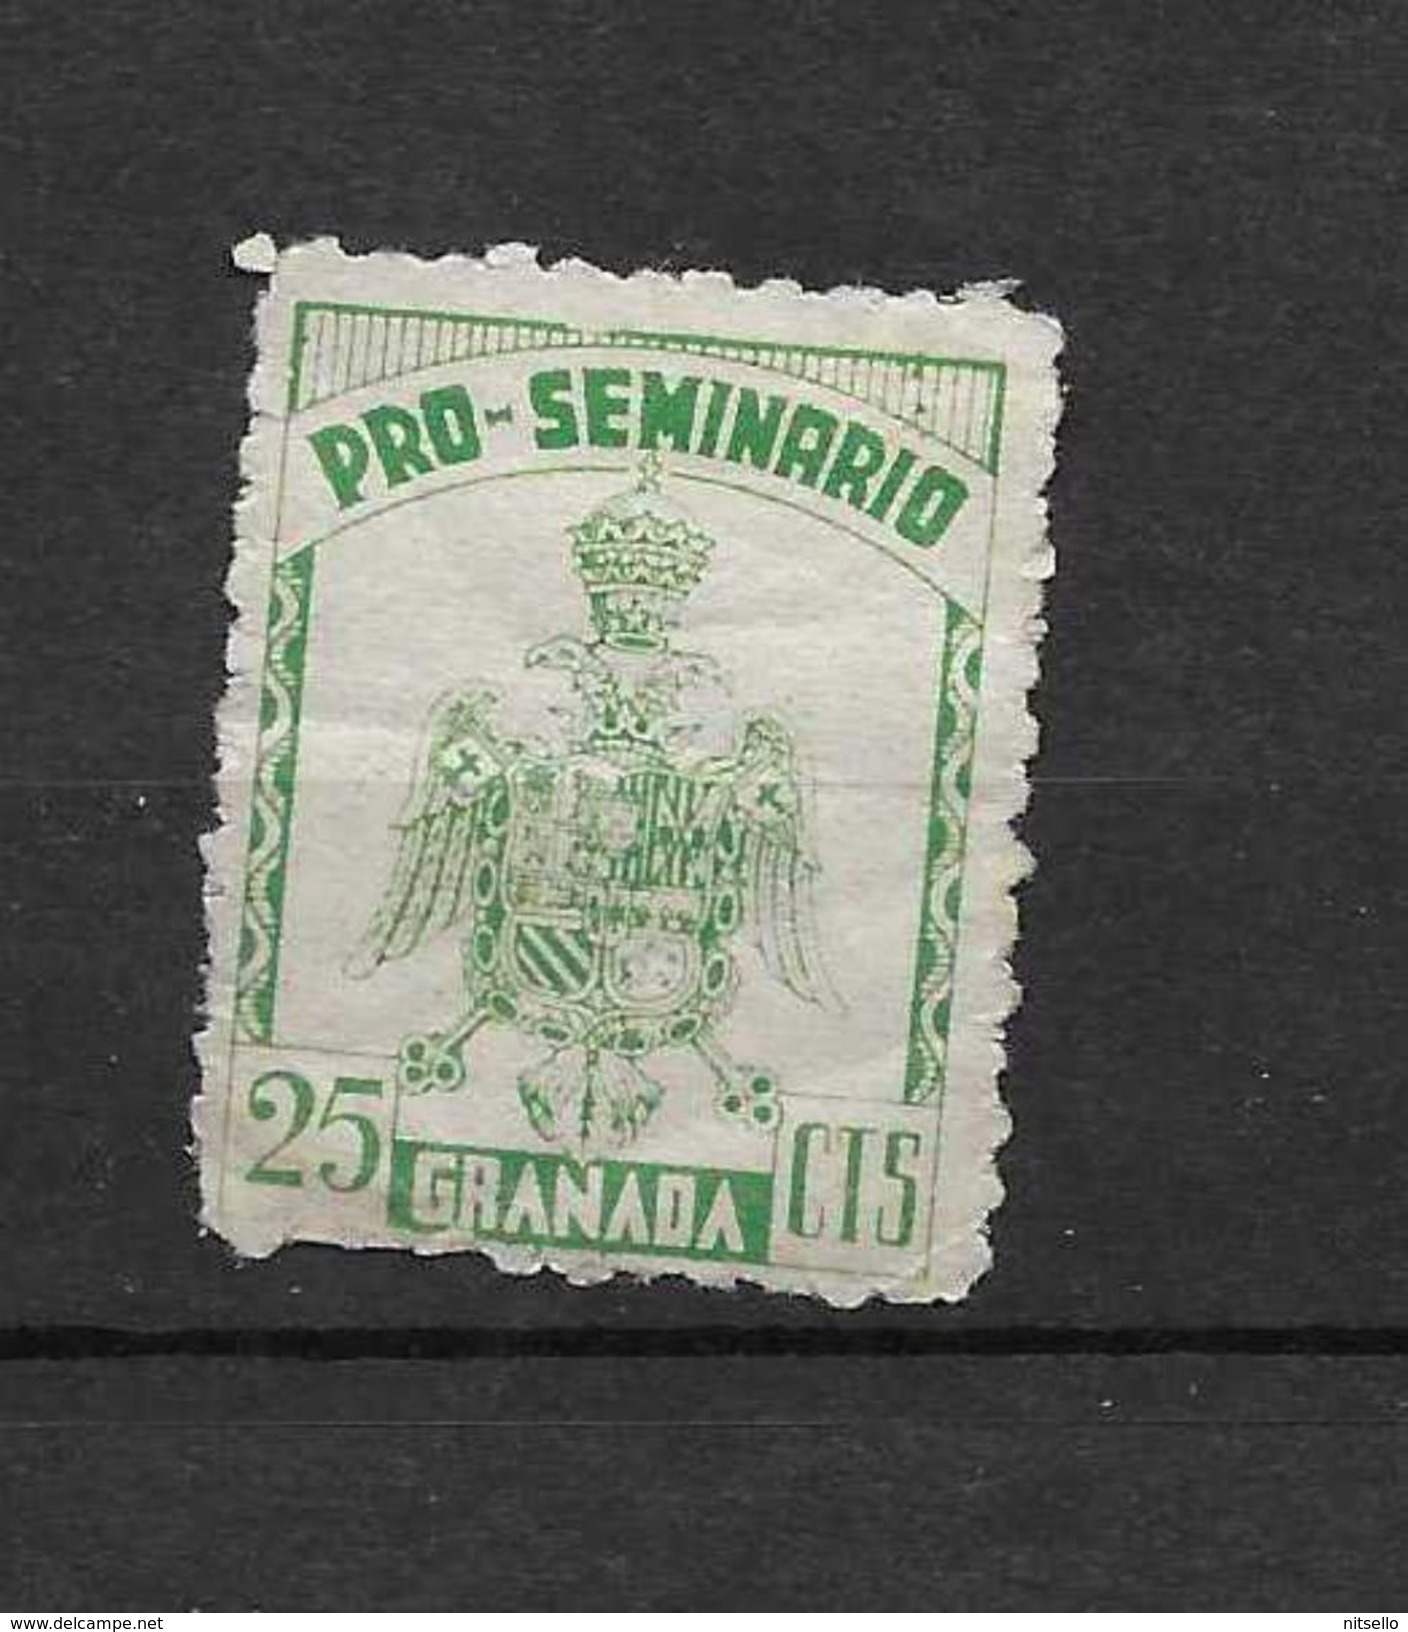 LOTE 2190   ///  PRO SEMINARIO   ¡¡¡¡¡¡ LIQUIDATION !!!!!!! - Spanish Civil War Labels